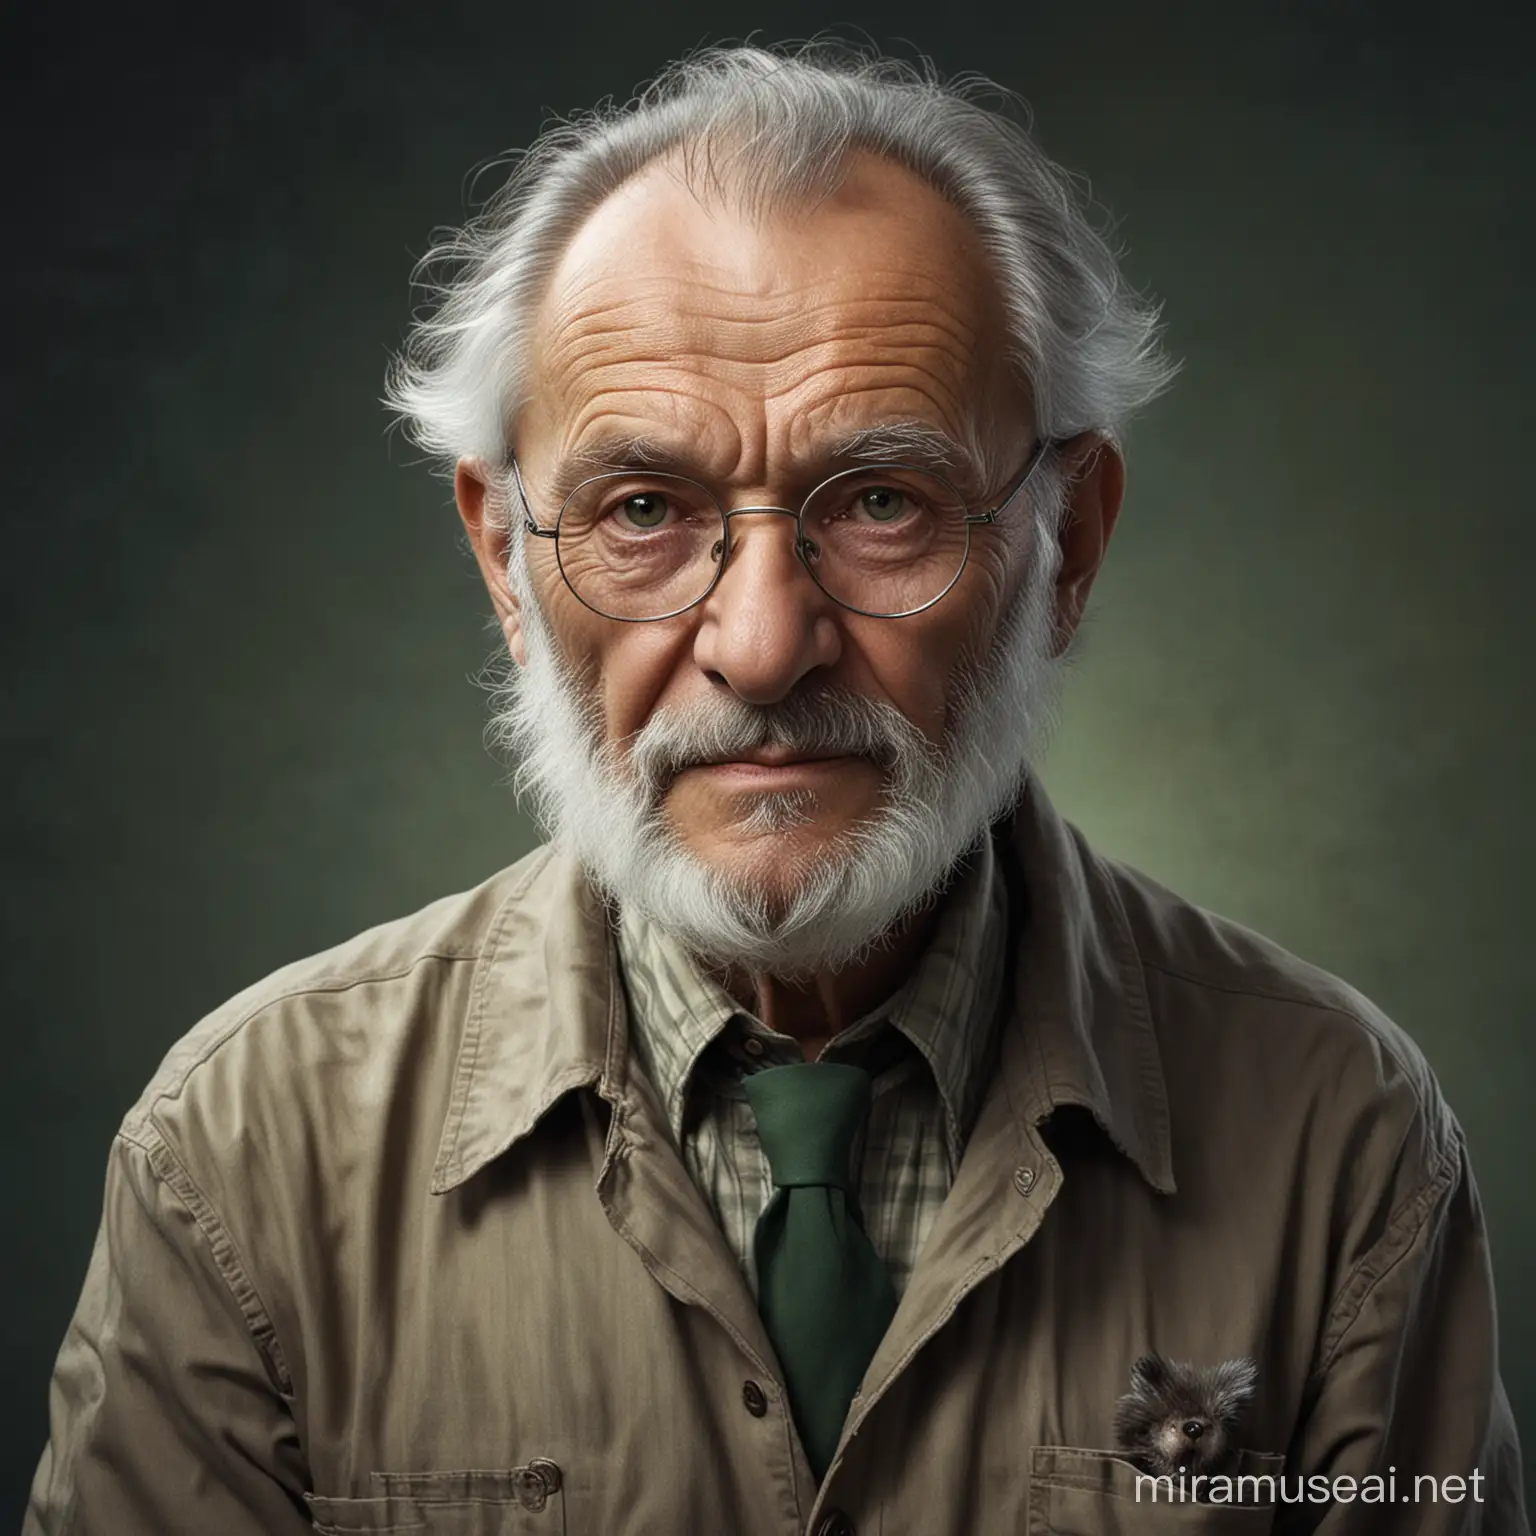 Elderly Biologist Resembling a Wise Wolf